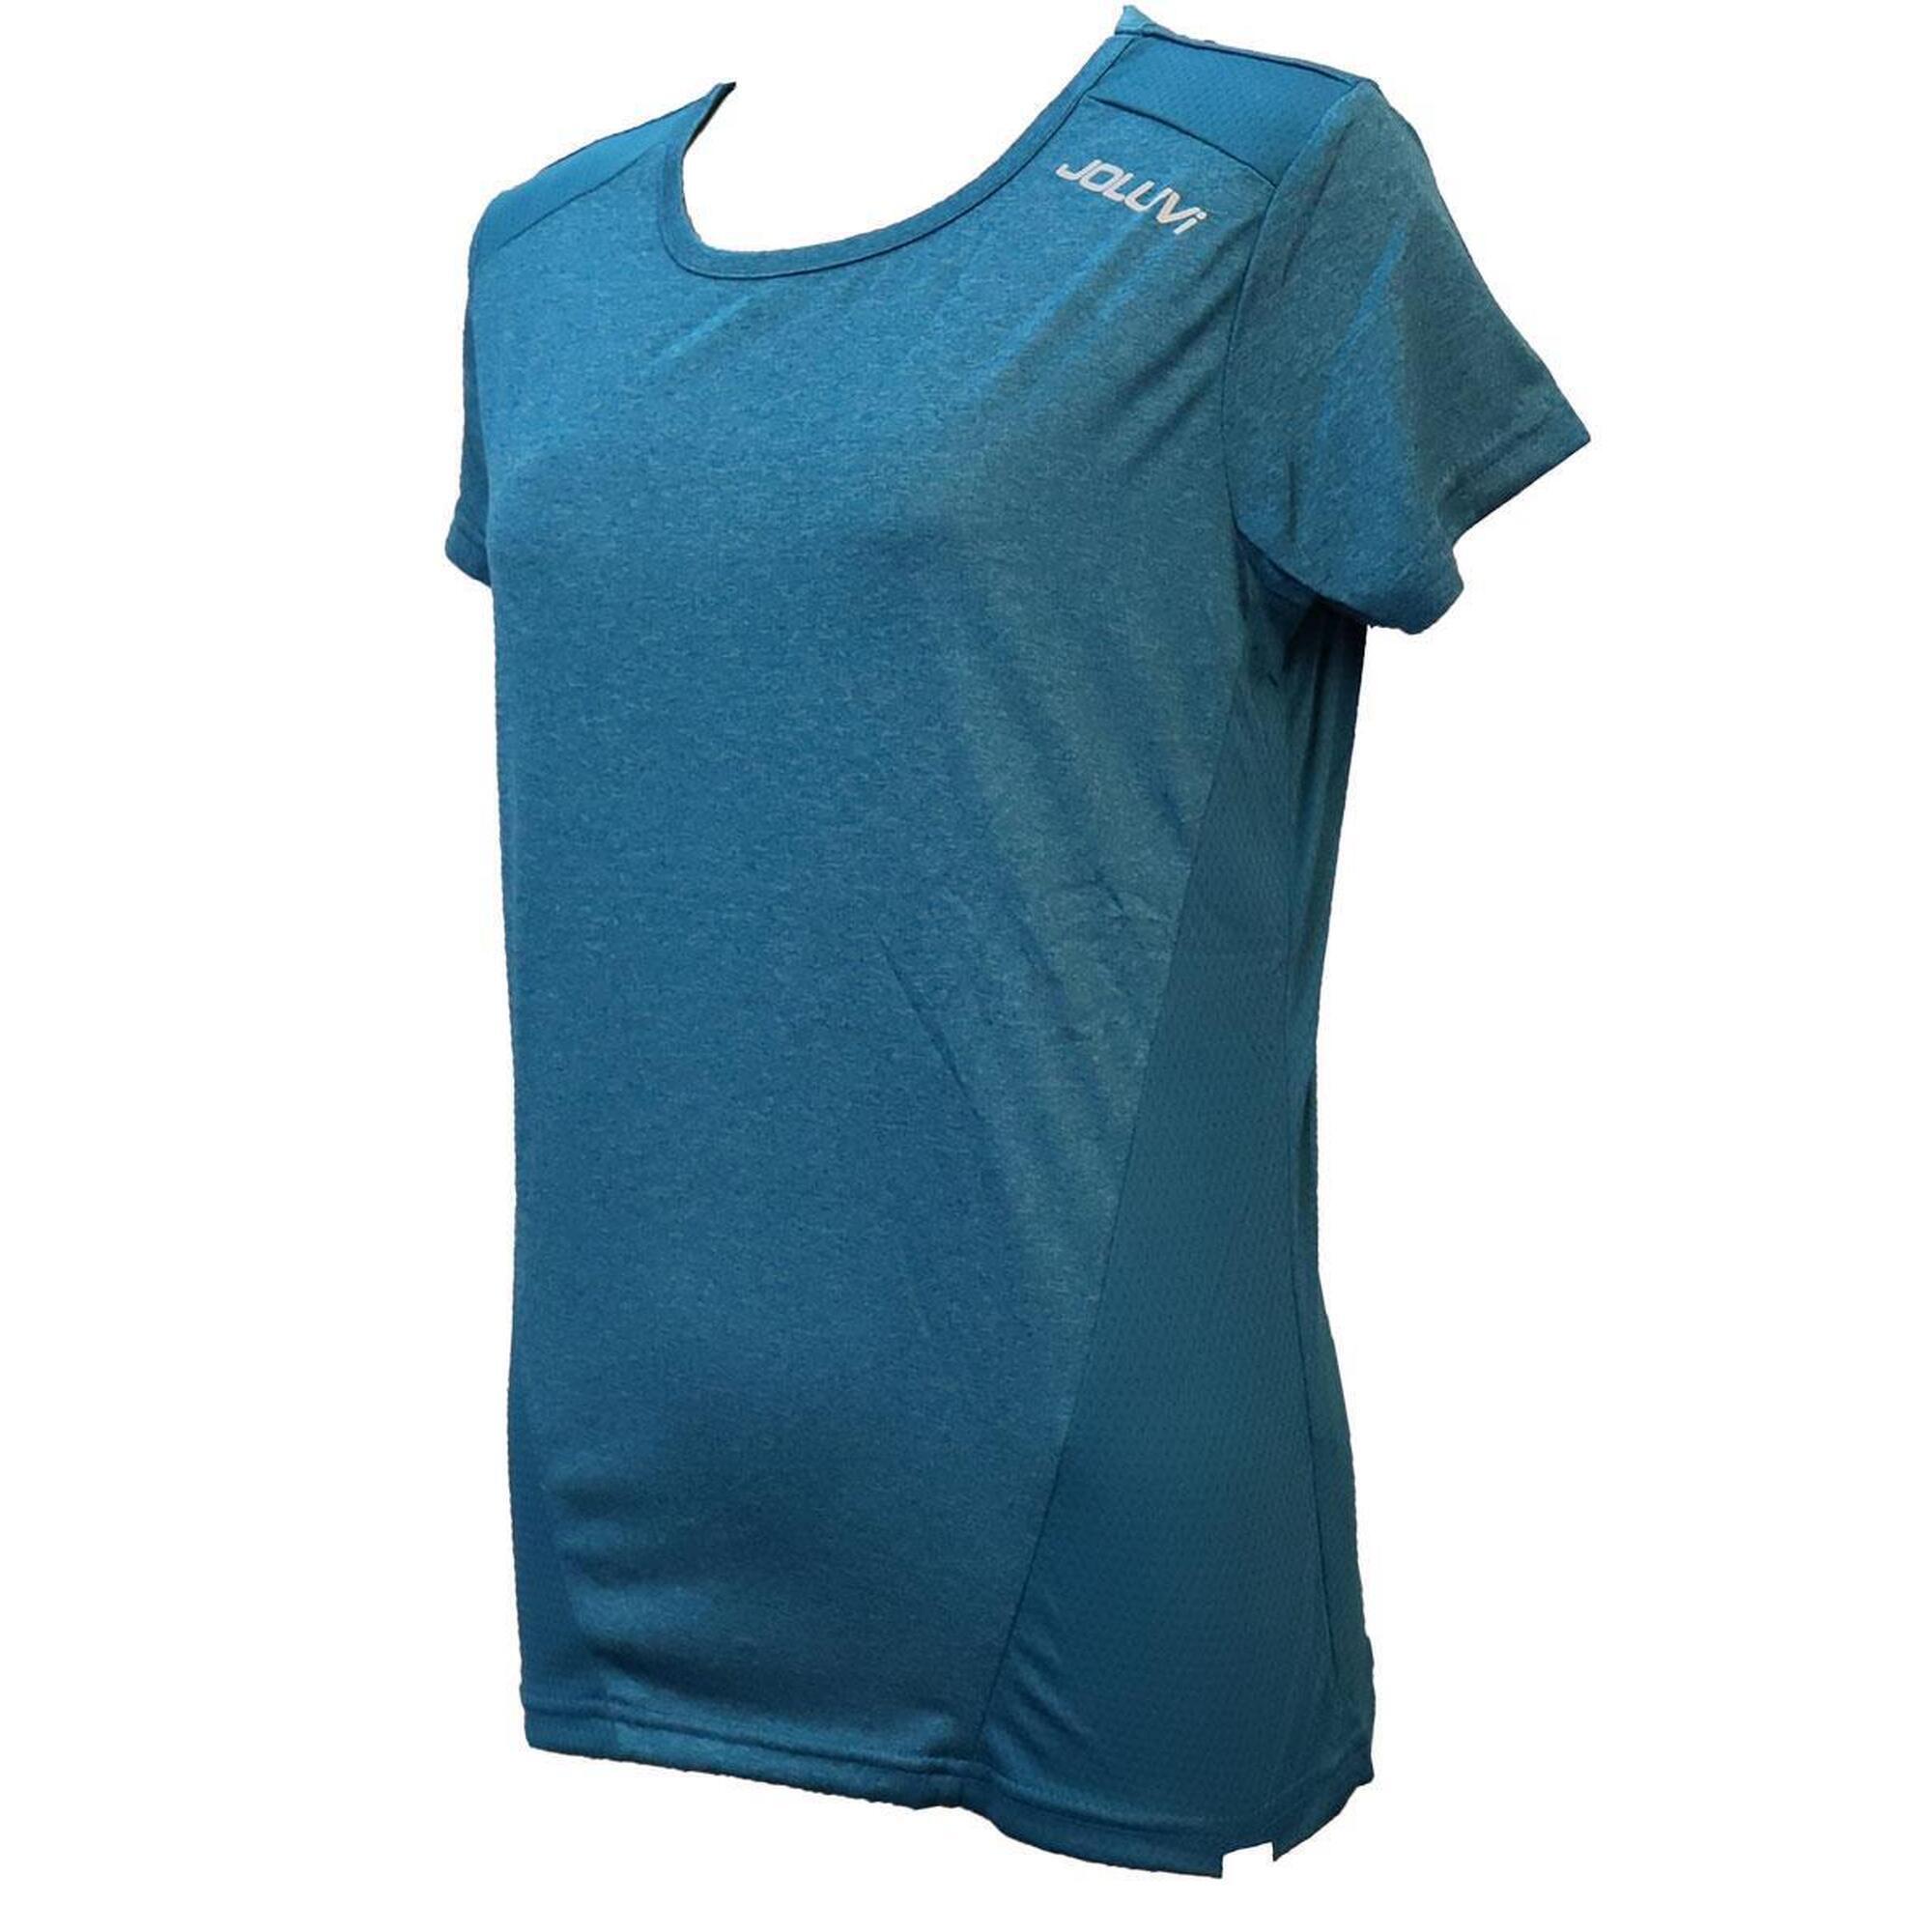 JOLUVI Joluvi Women's Spitt T-Shirt - Turquoise